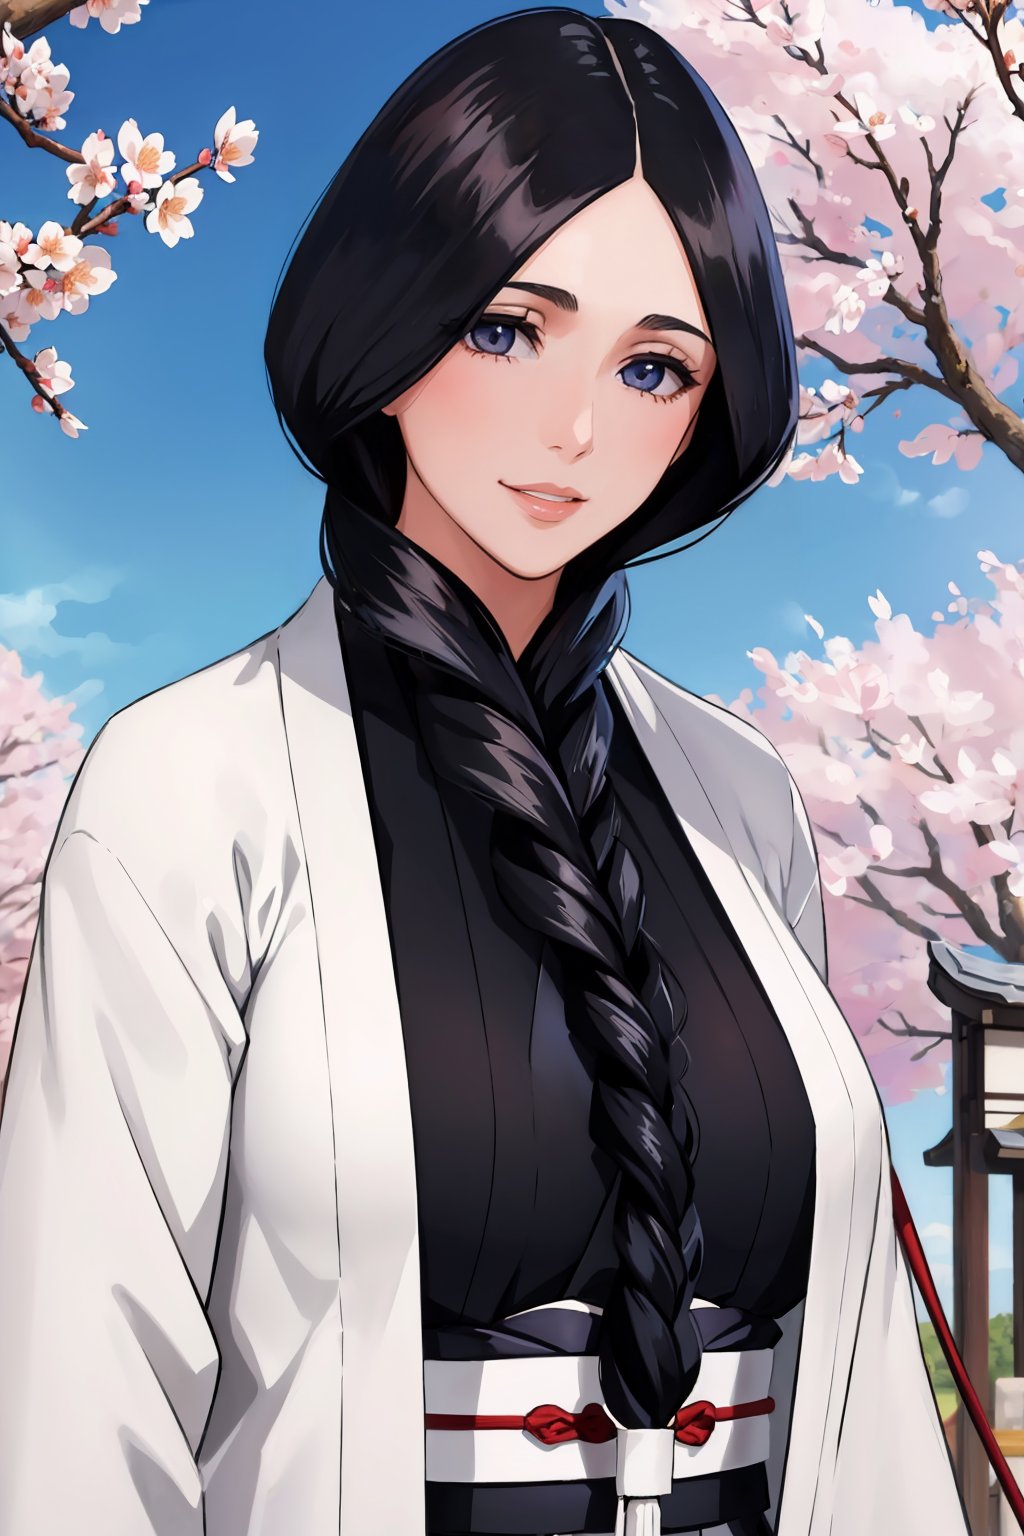 masterpiece, best quality, <lora:unohanaretsu-nvwls-v1-000009:0.9> unohana retsu, single braid, white coat, black kimono, upper body, looking at viewer, smile, sky, large breasts, mature female, cherry blossoms